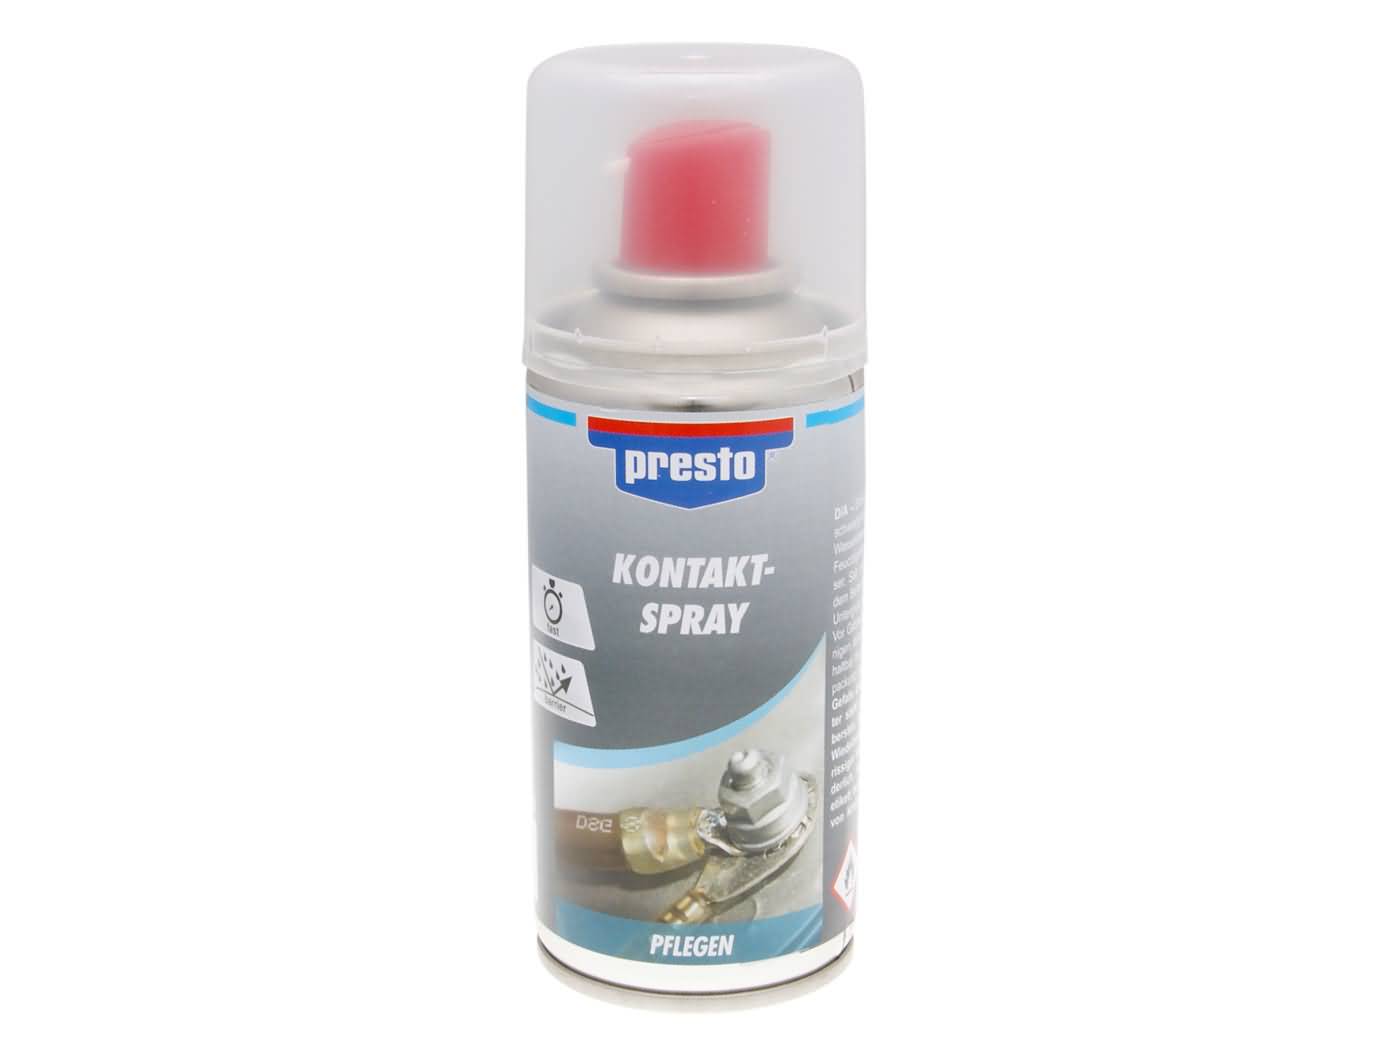 Presto contact spray 150ml